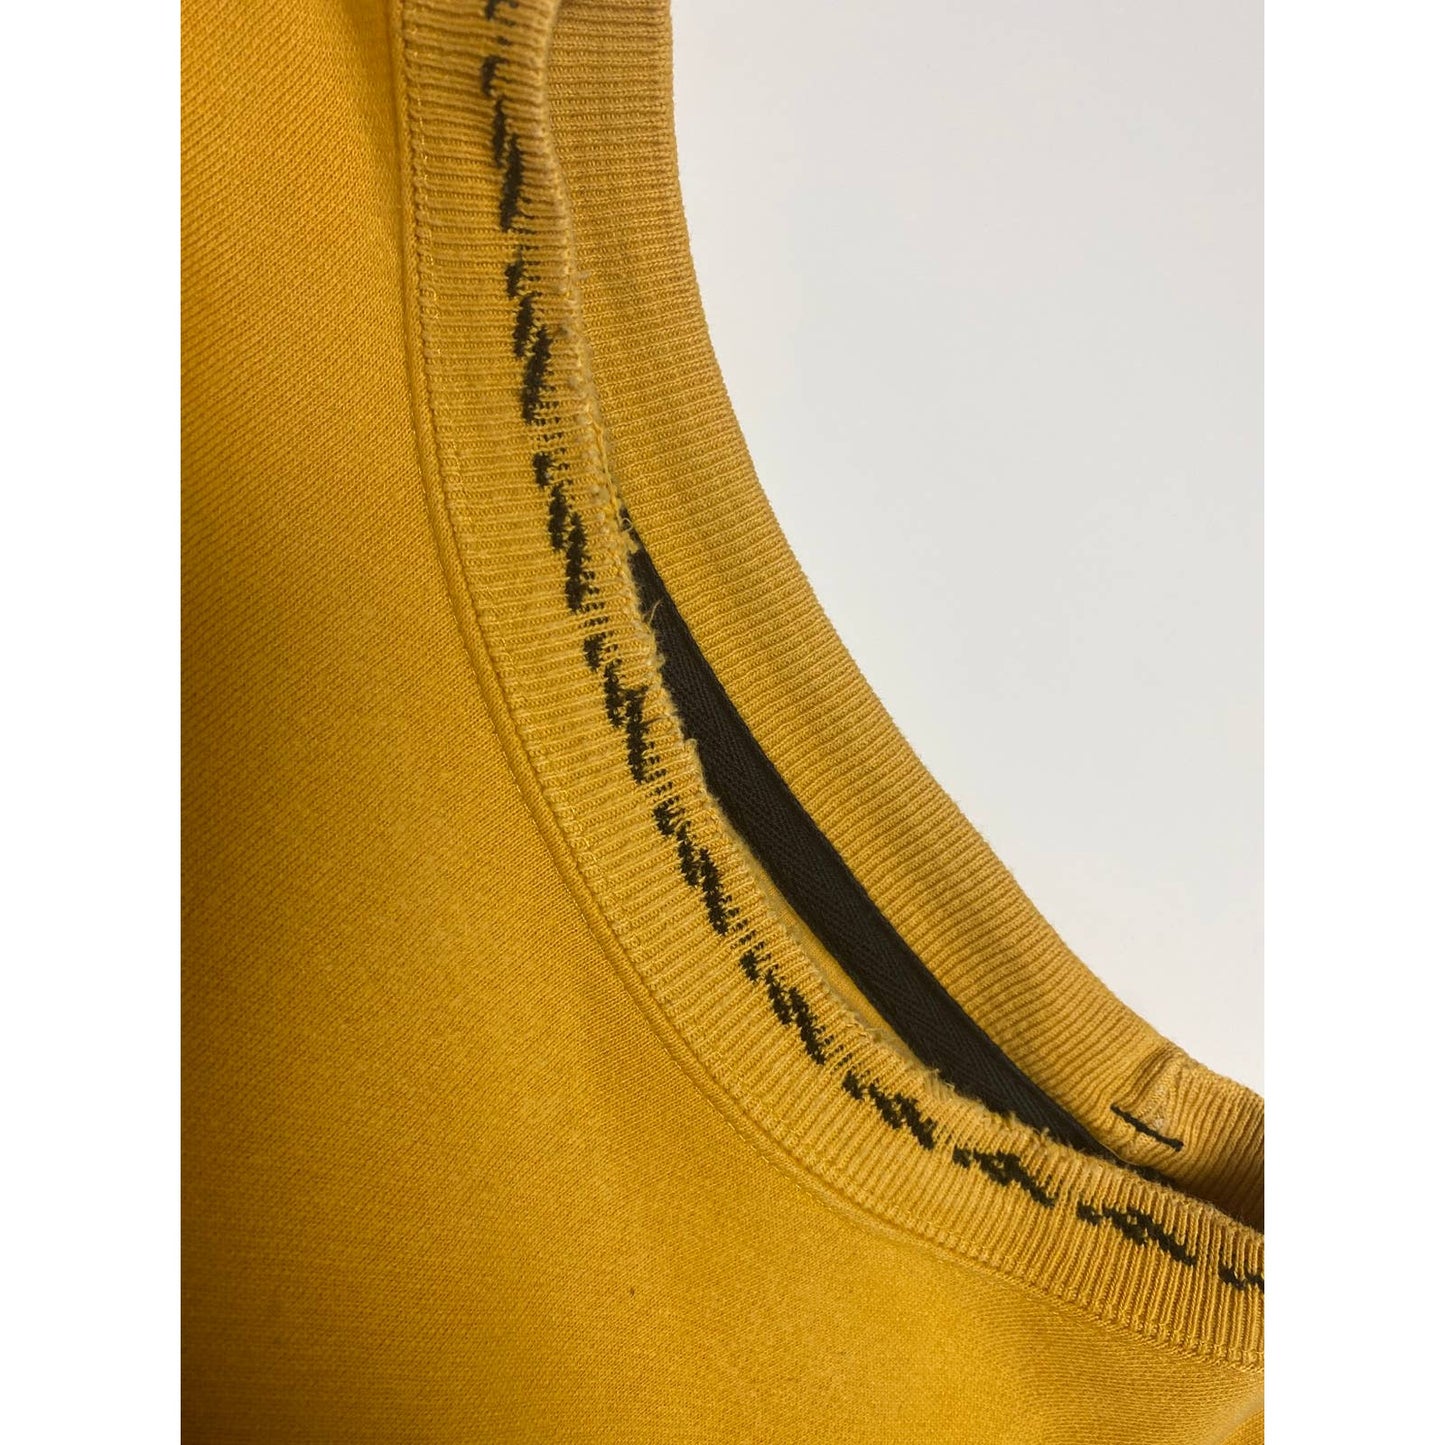 Adidas Equipment vintage yellow big logo sweatshirt 90s